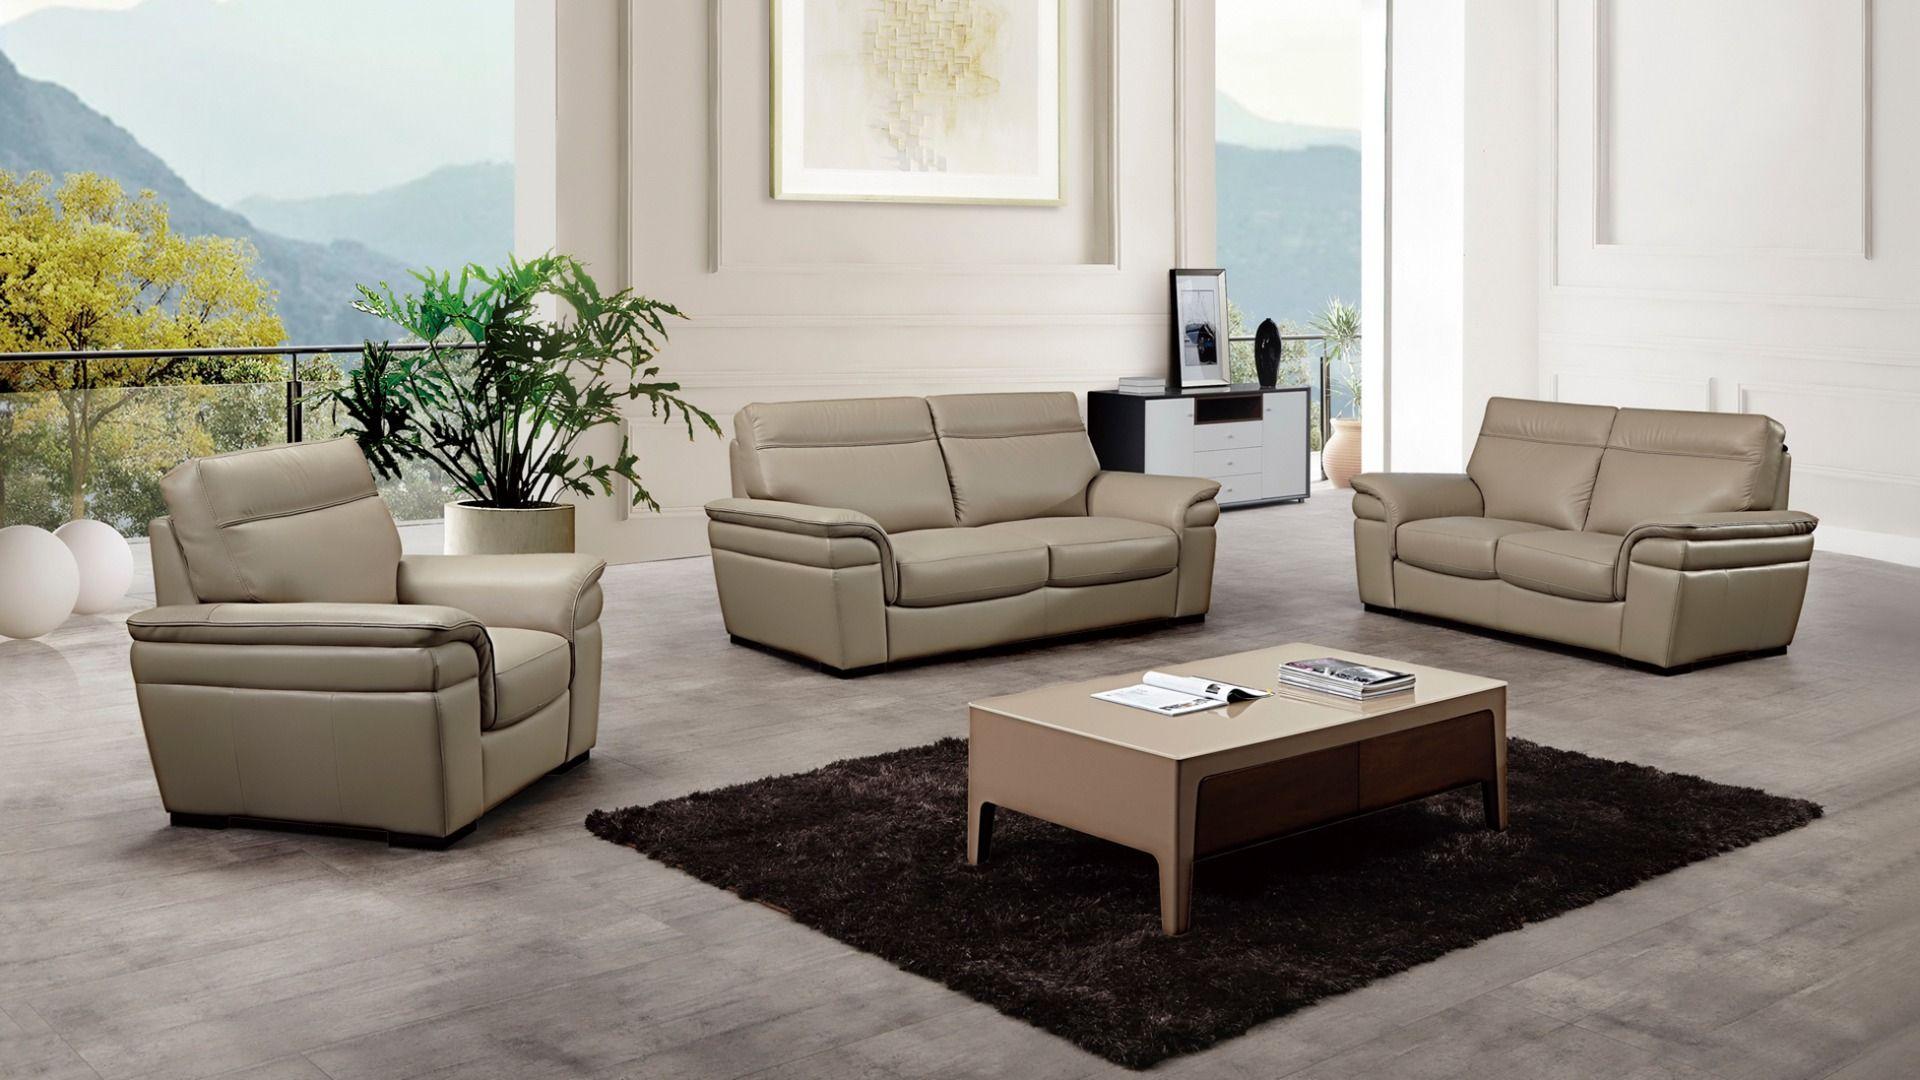 

                    
American Eagle Furniture EK020-TAN-SF Sofa Tan Italian Leather Purchase 
